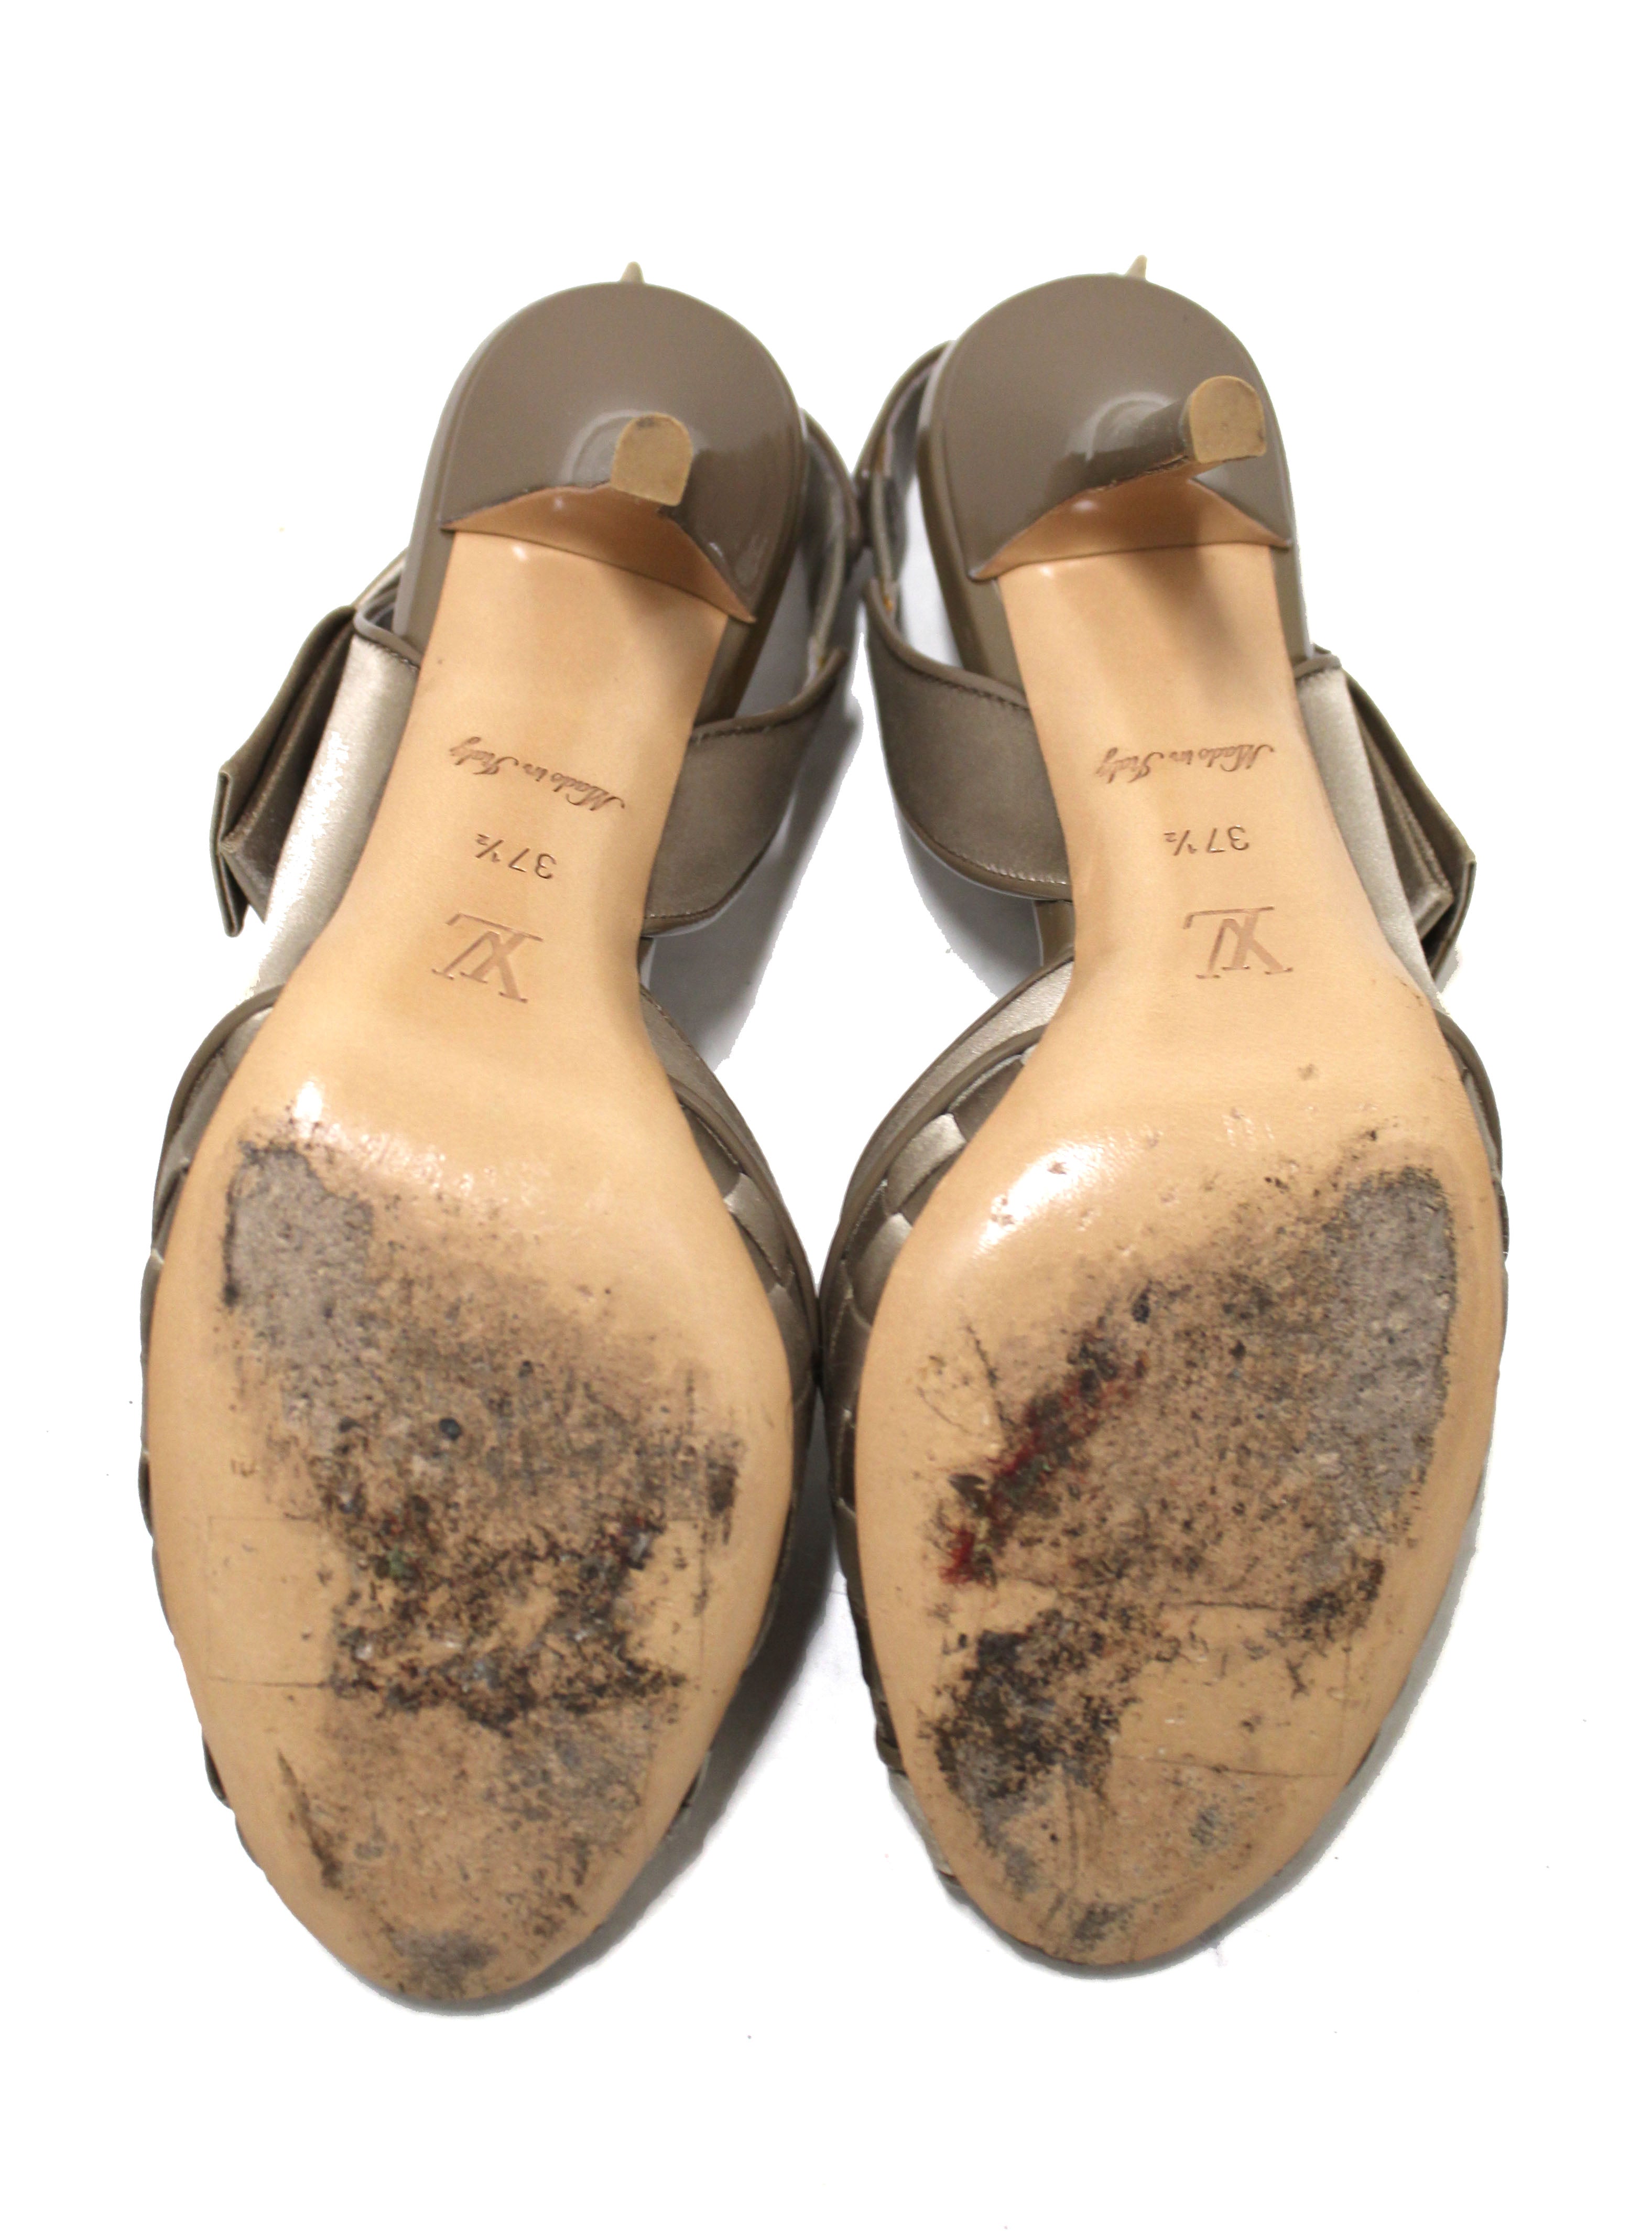 Vintage Louis Vuitton taupe satin sandal heels. Rare